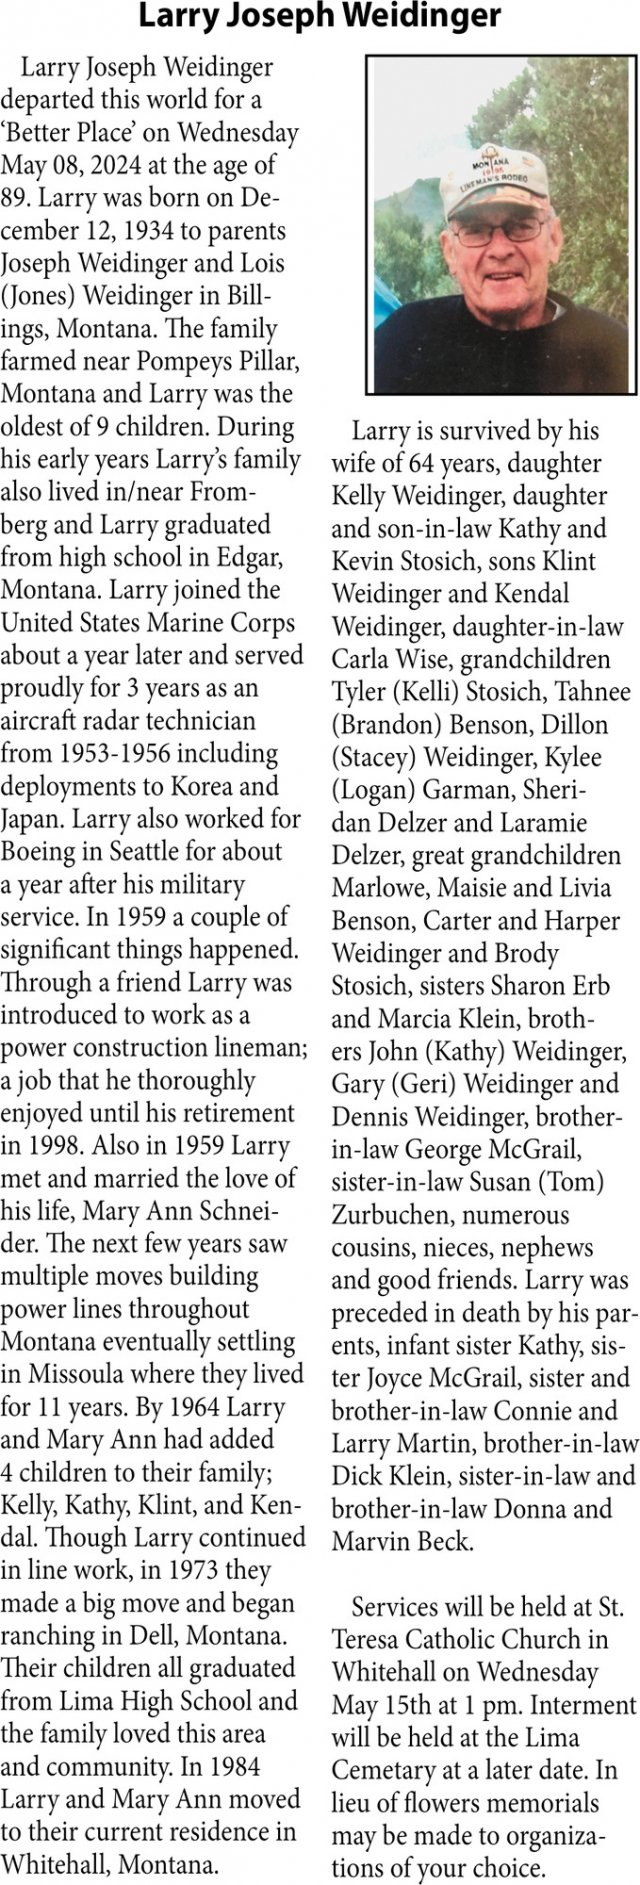 Larry Joseph Weidinger, Obituaries, Glendive, MT